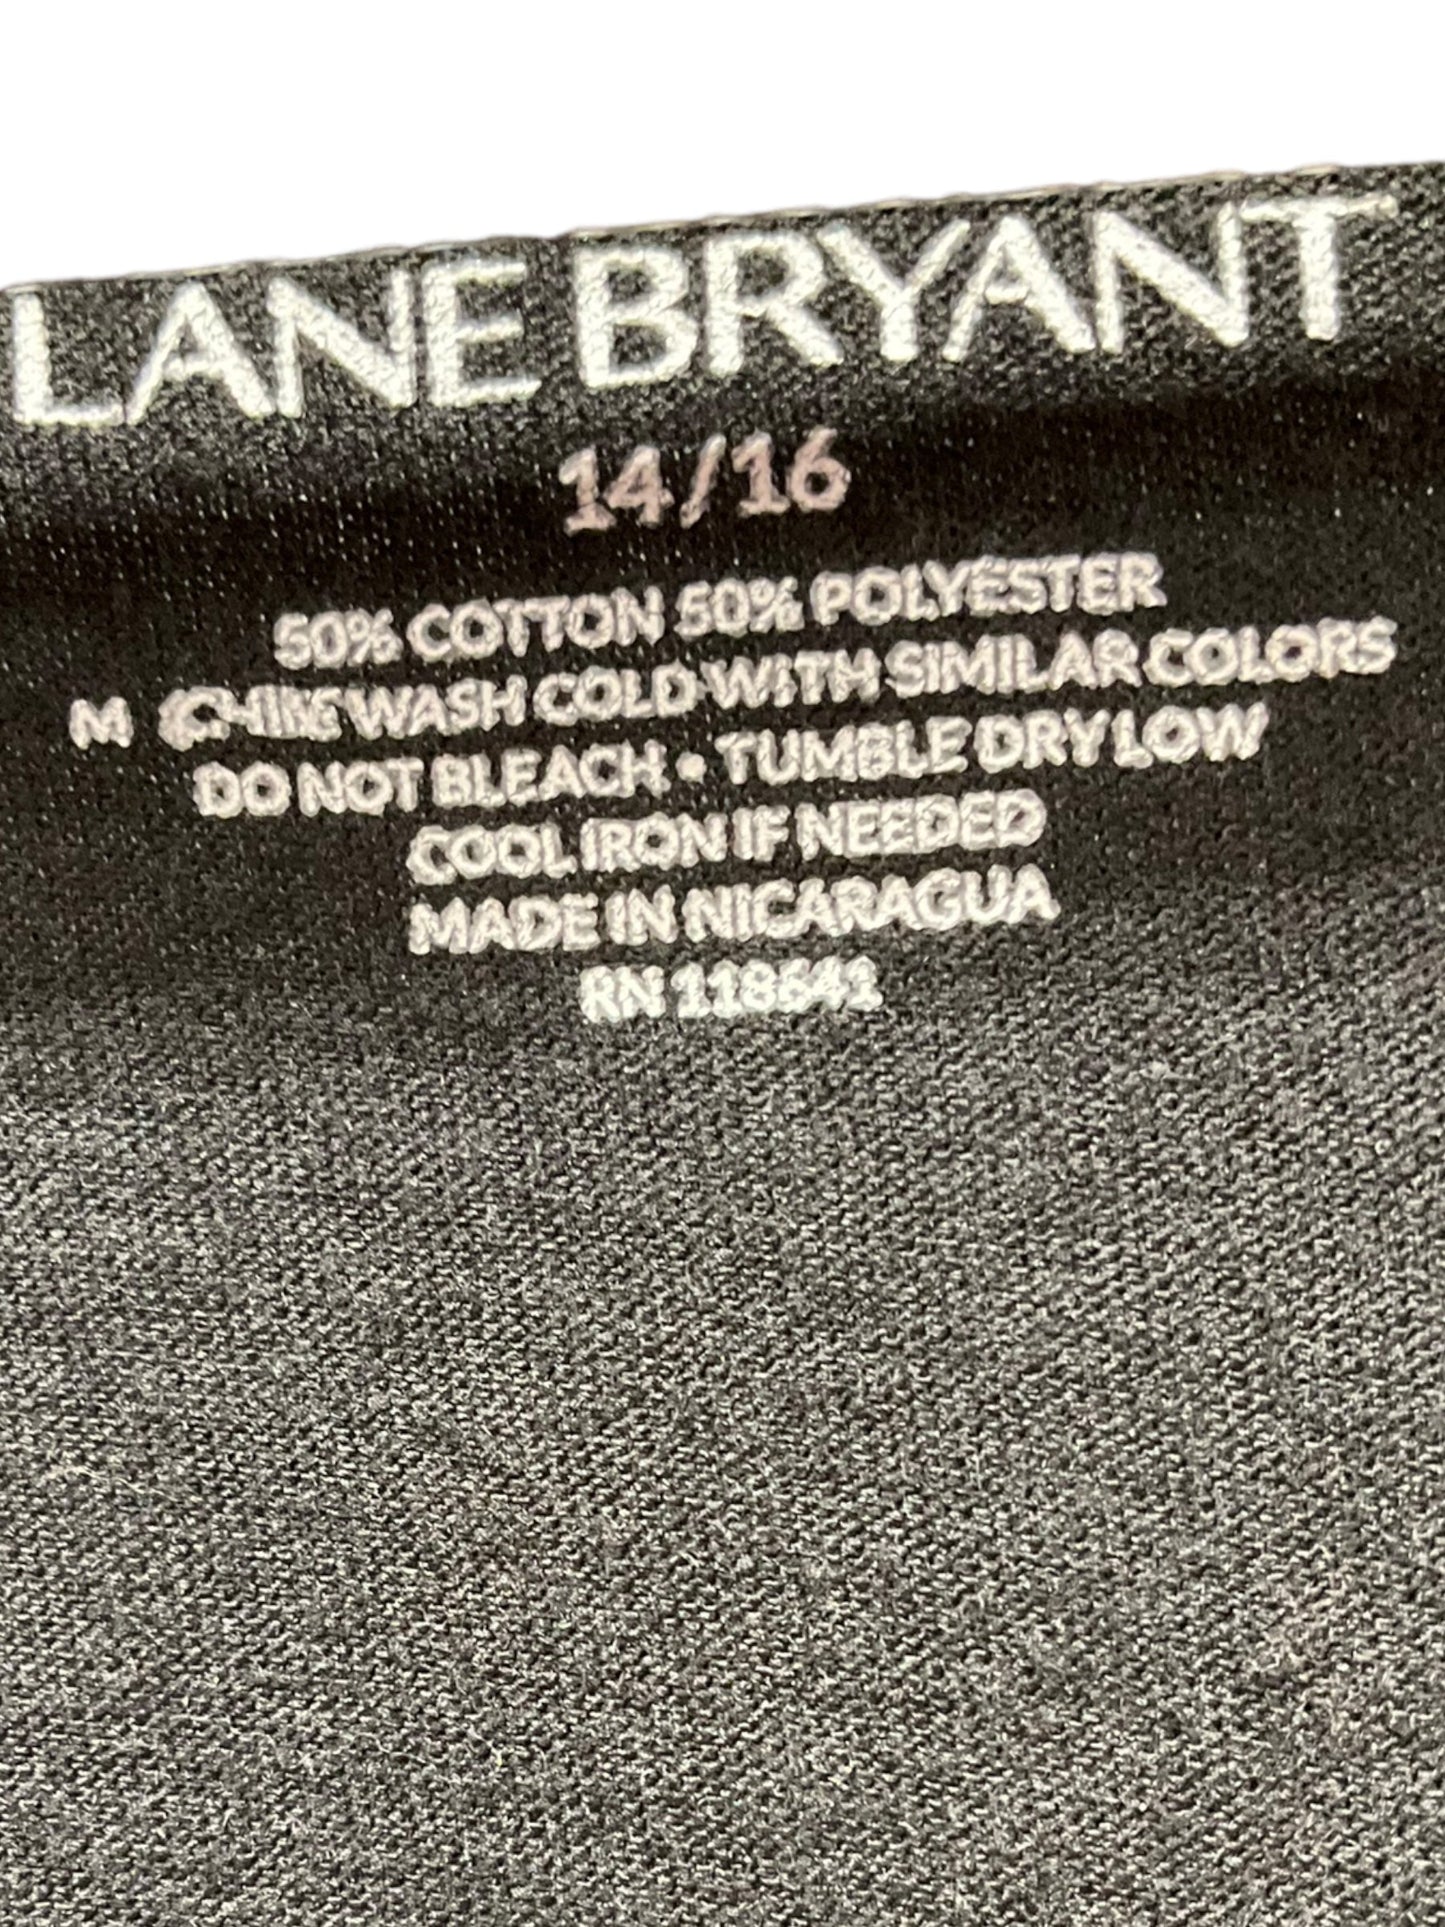 Black Top Short Sleeve Basic Lane Bryant, Size Xl